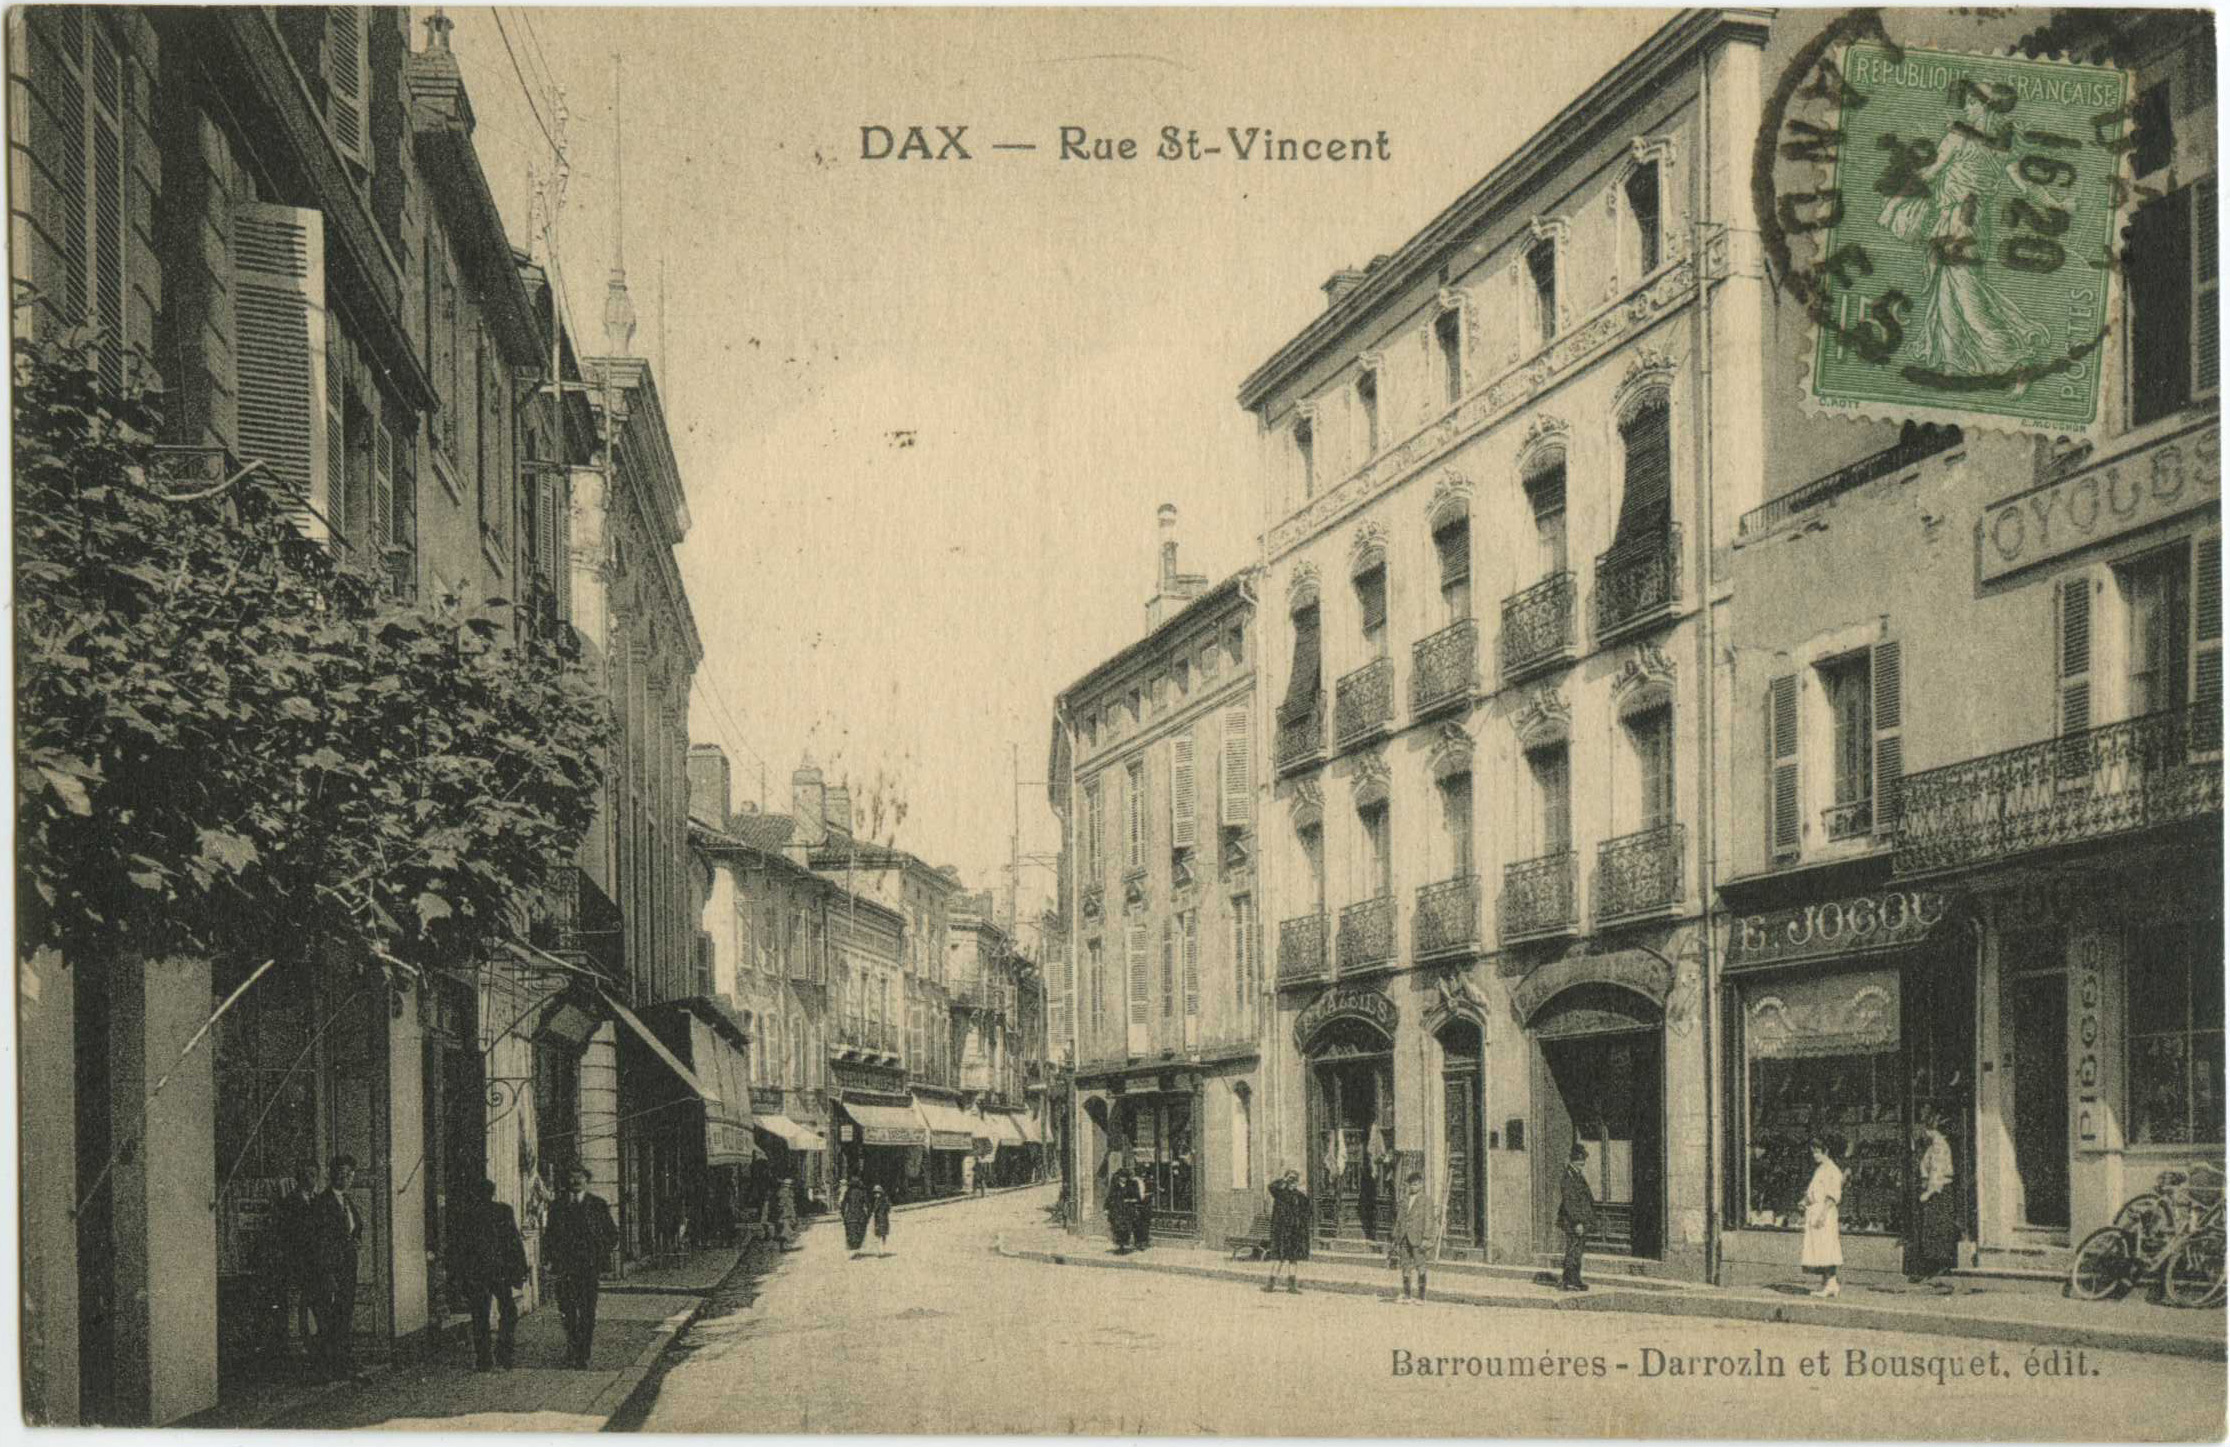 Dax - Rue St-Vincent